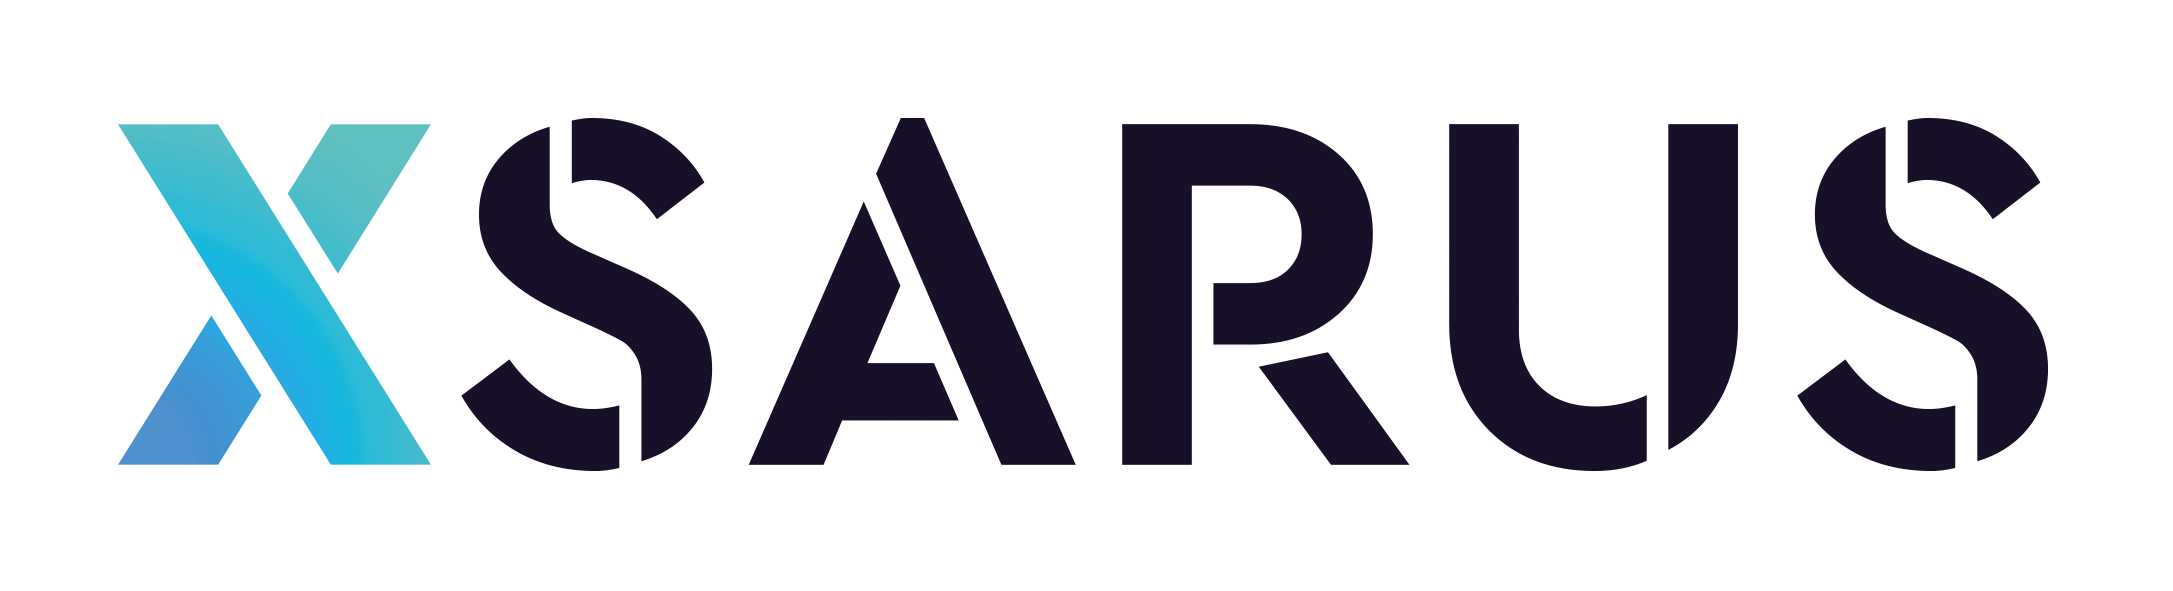 XSARUS Logo